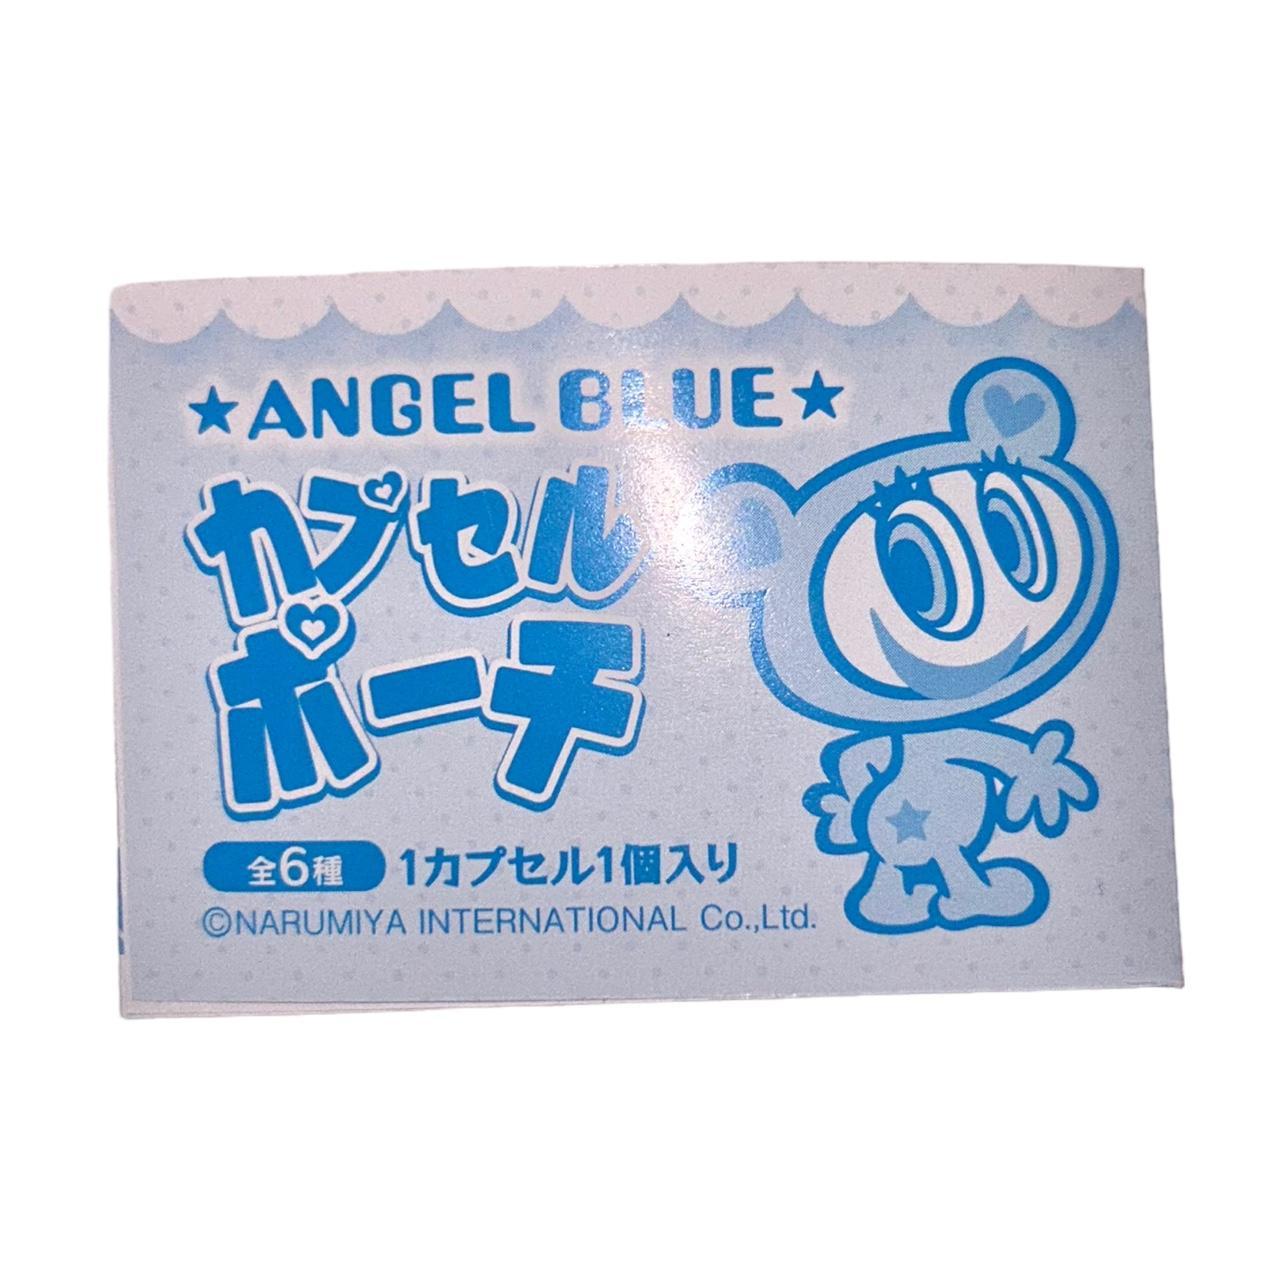 Angel Blue Women's Bag (4)